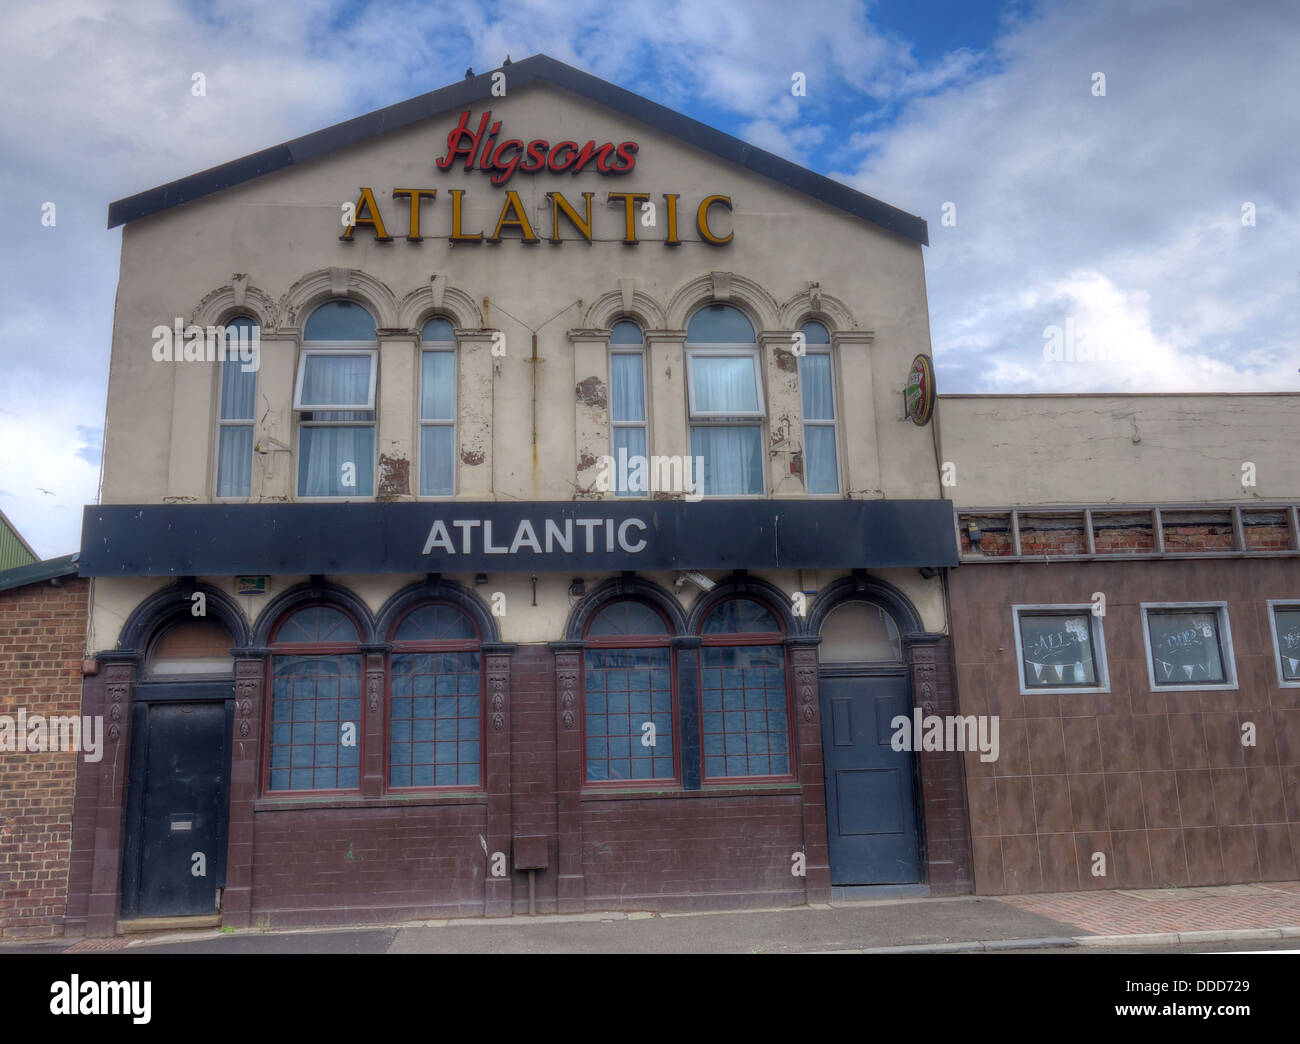 The Atlantic Pub, Higsons, Regent Road / Dock road / Sandhills lane, Liverpool L20 8DD - demolished 2020 Stock Photo